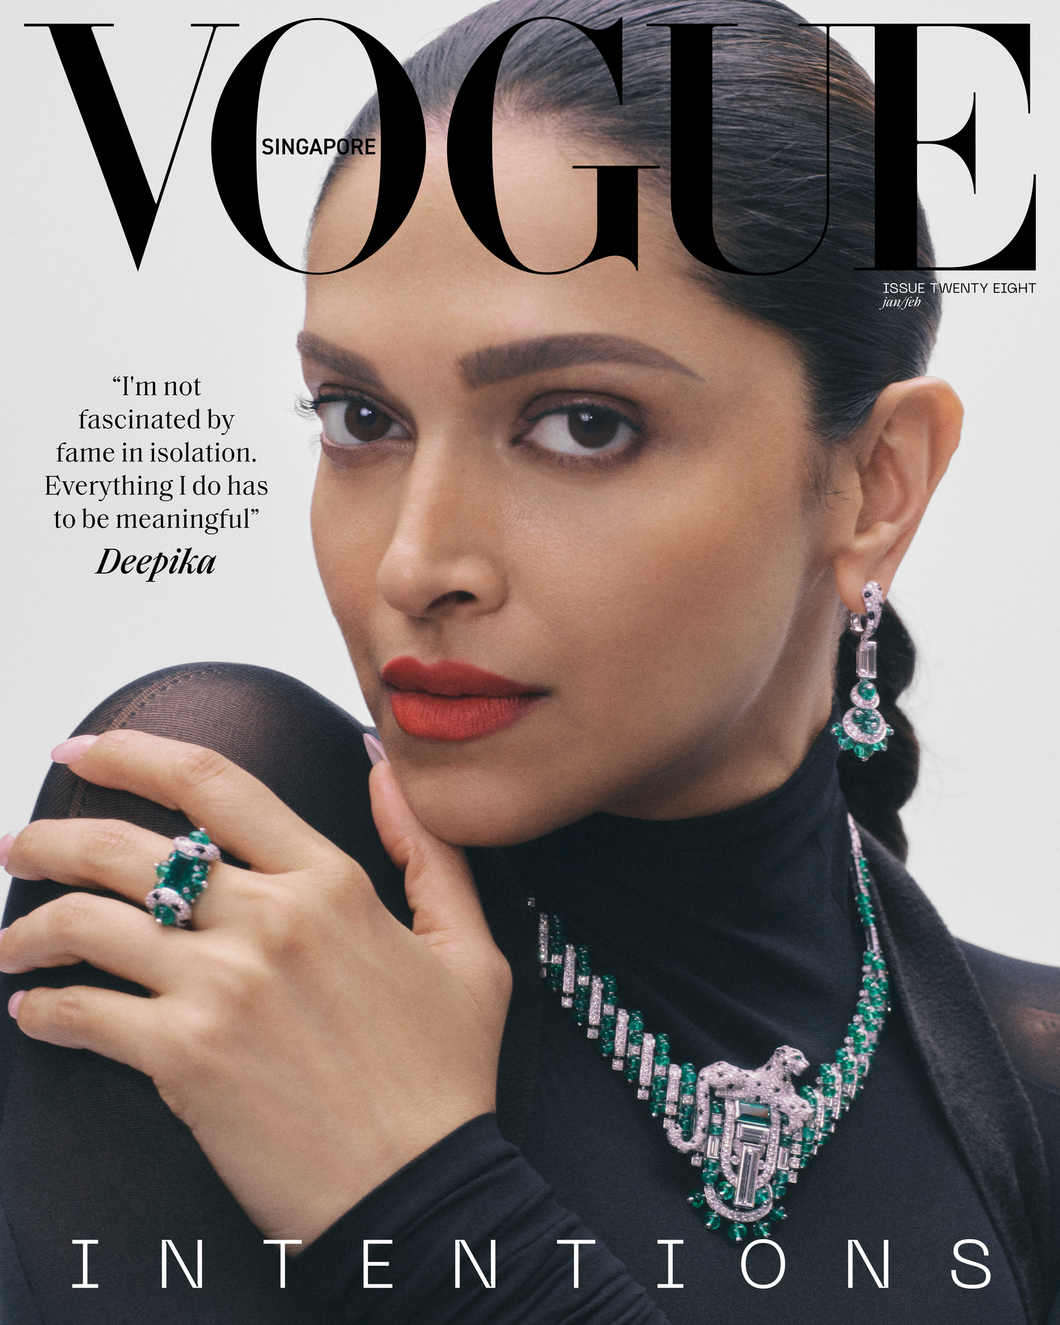 Vogue Singapore: Issue Twenty Eight, INTENTIONS